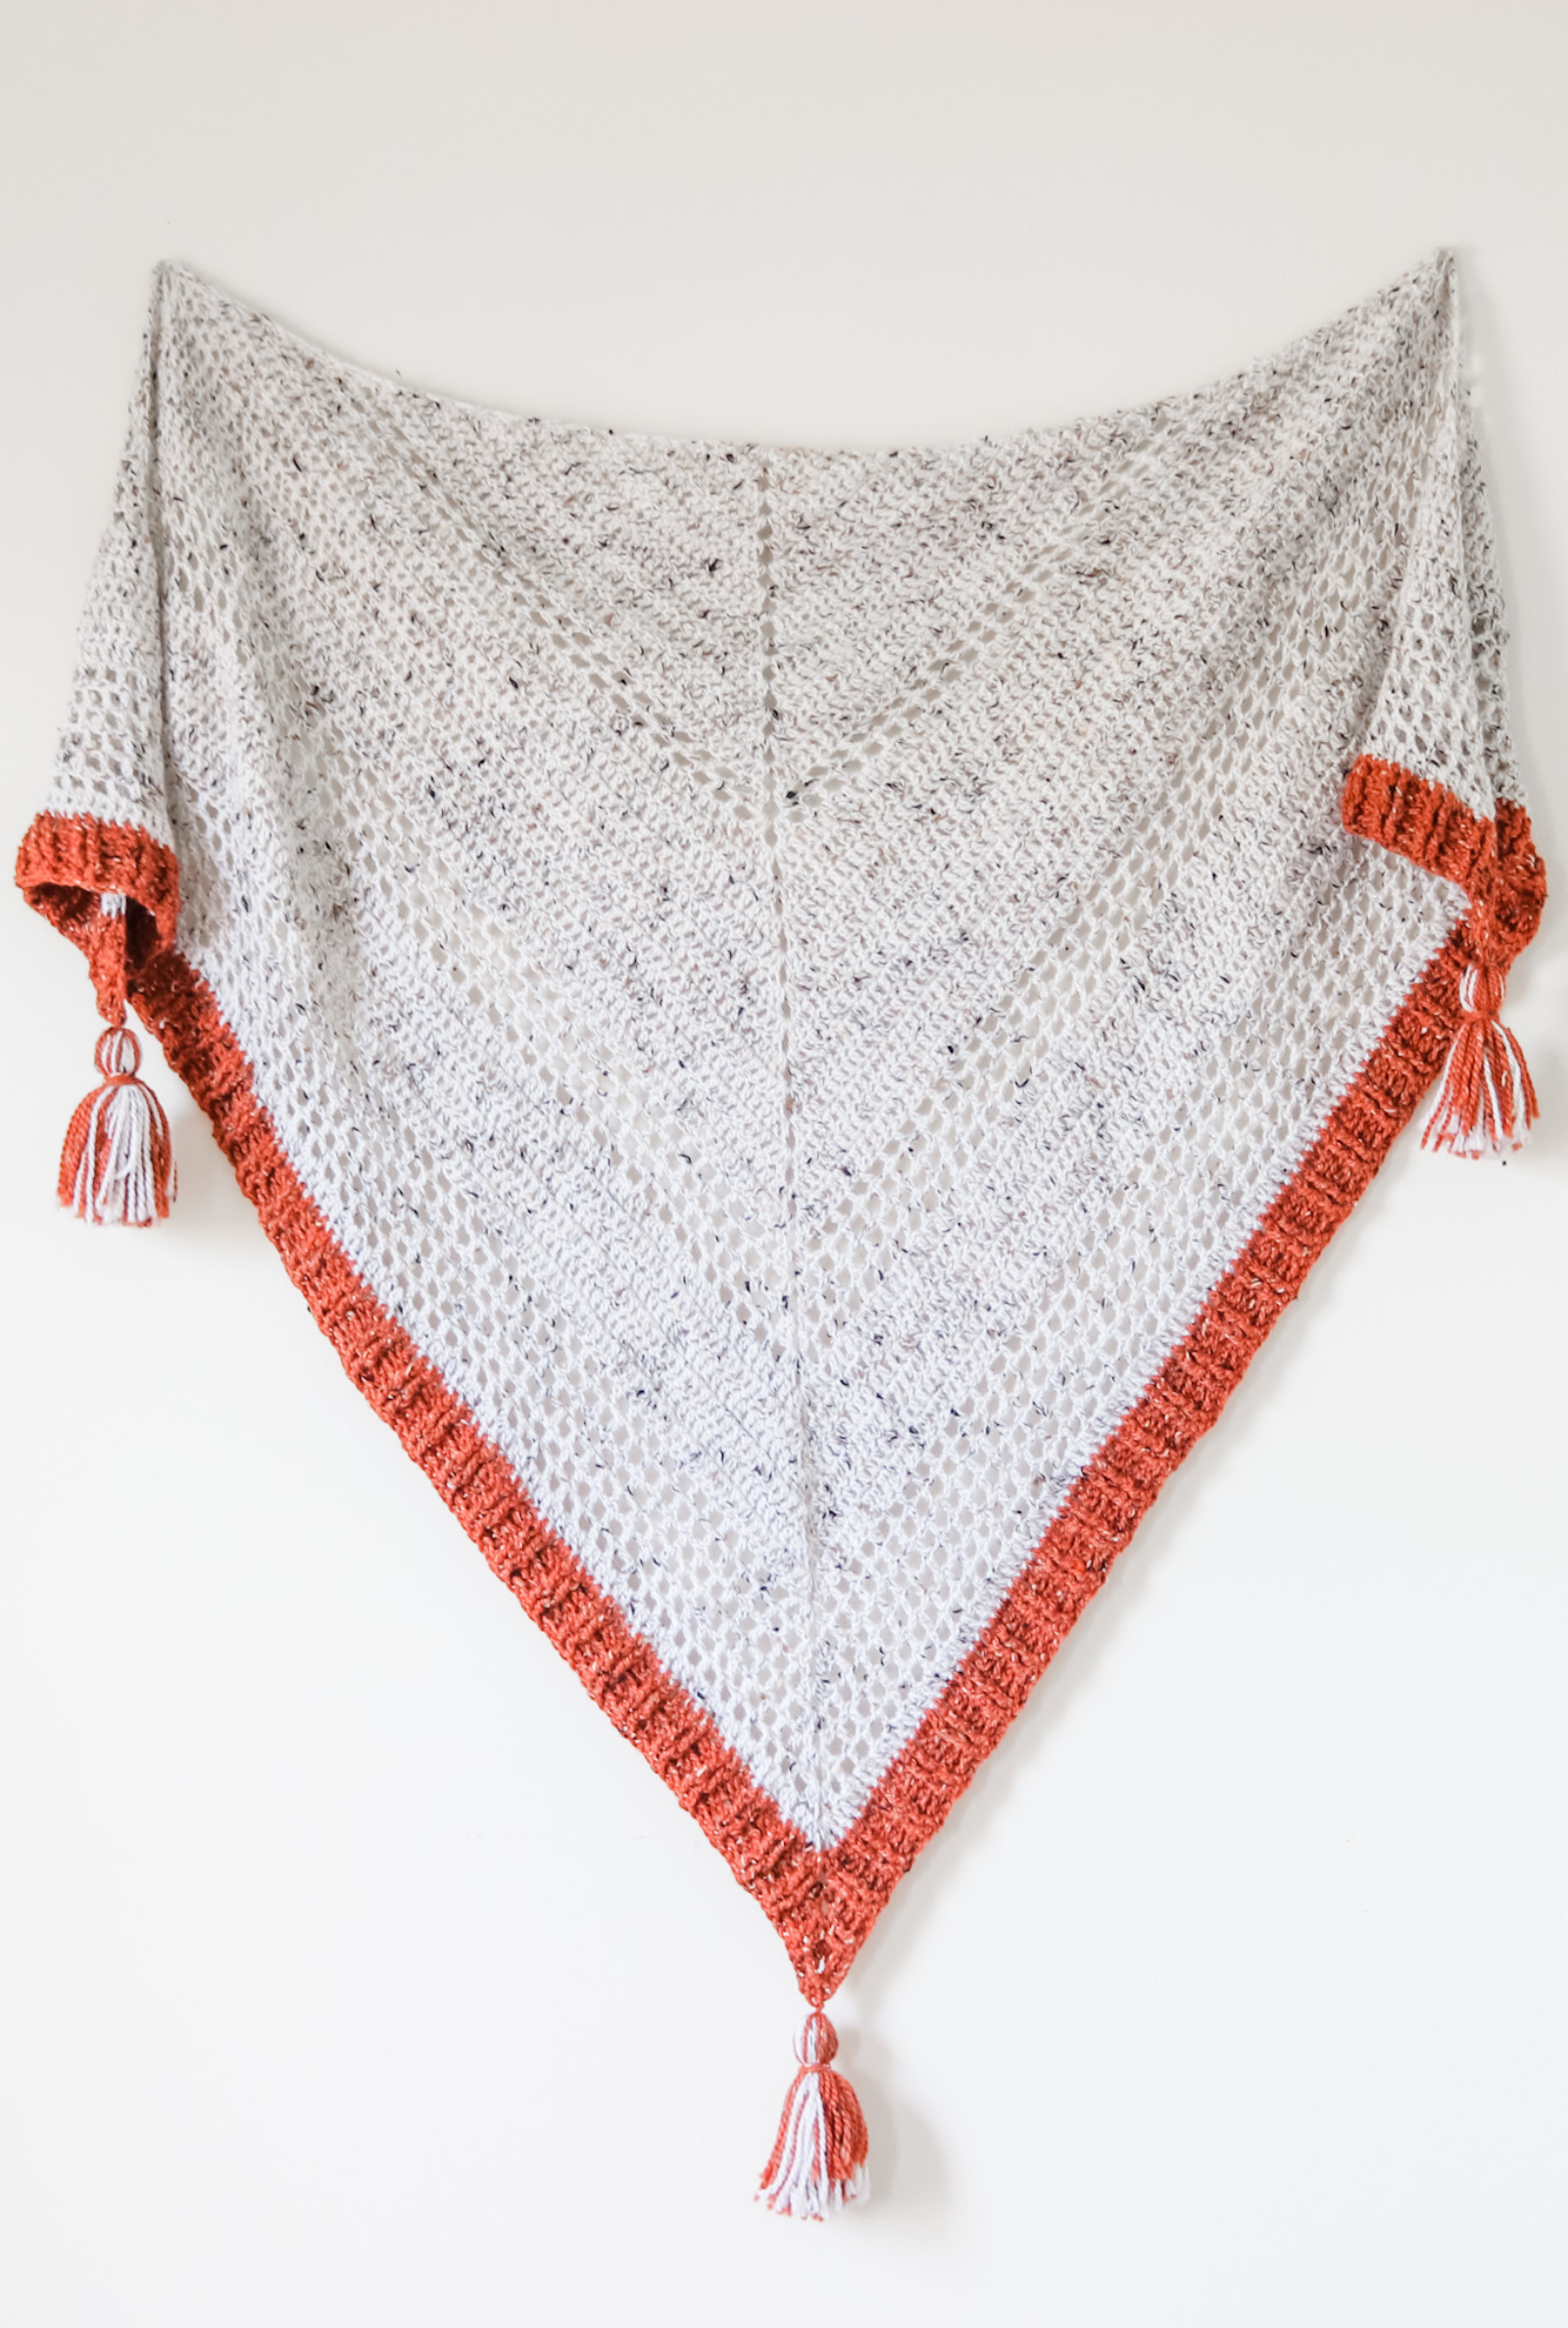 Hayride Triangle Scarf // Crochet PDF Pattern